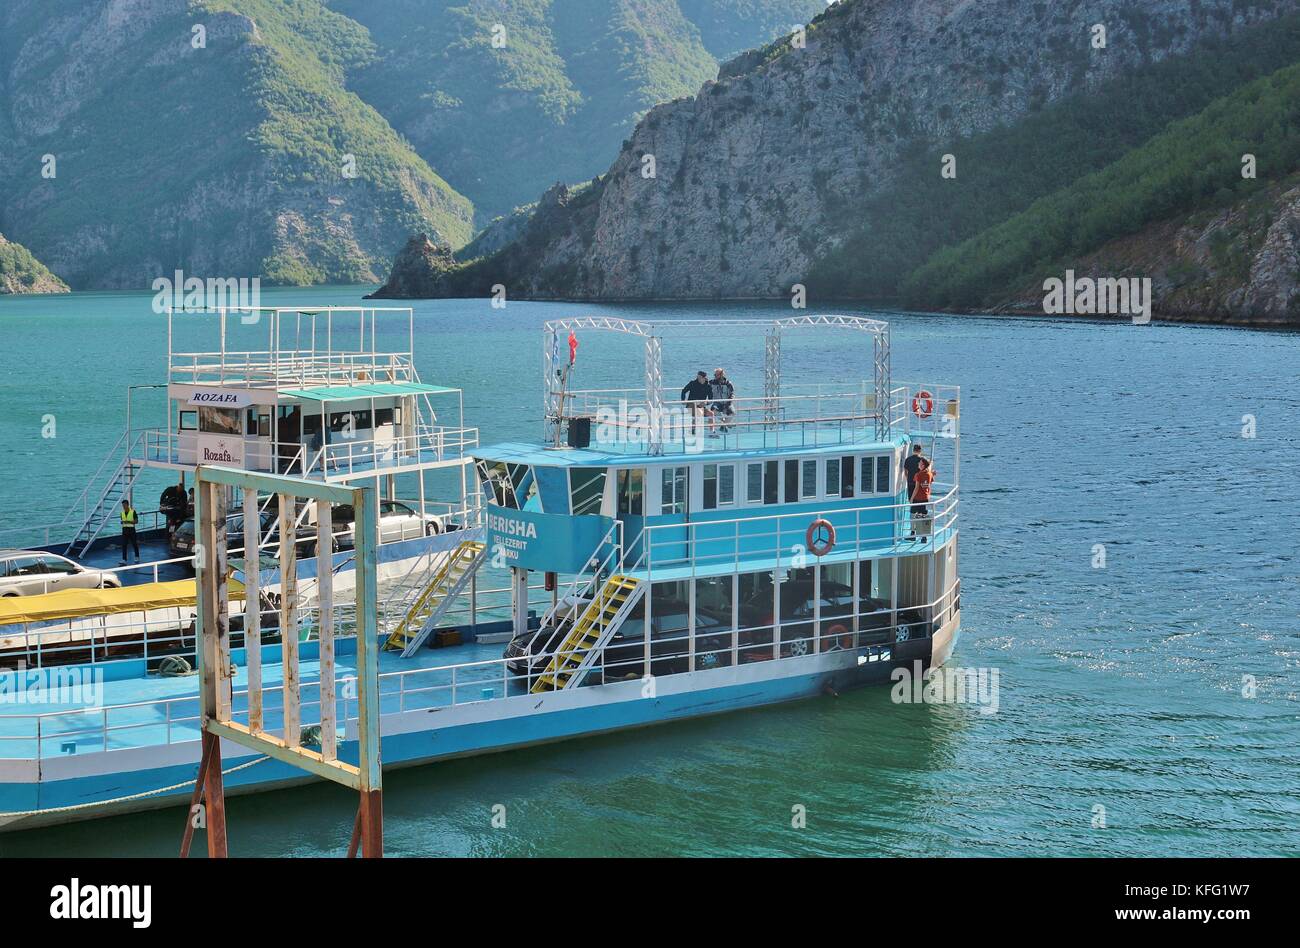 Ferries in the harbor of Koman, on Komani lake, 35 km long. A fascinating mountain world around. North Albania, Southeast Europe. Stock Photo